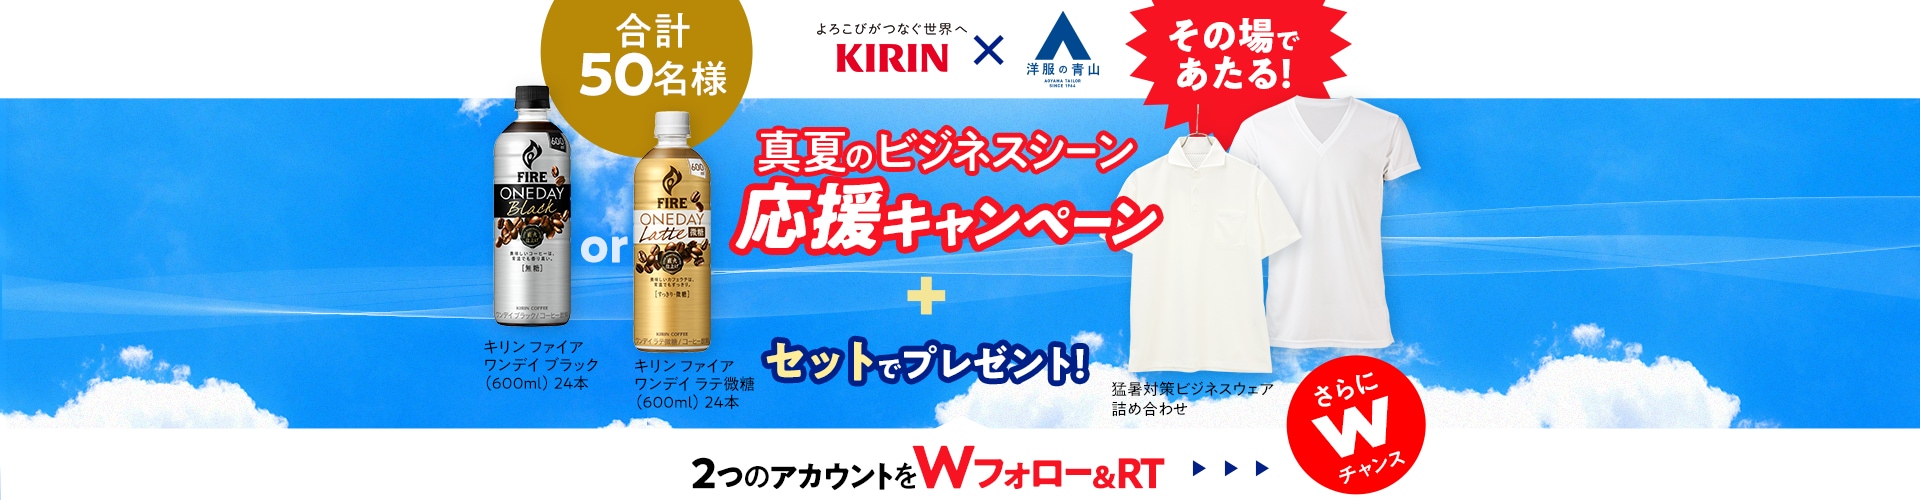 #KIRIN×洋服の青山 真夏のビジネスシーン応援キャンペーン